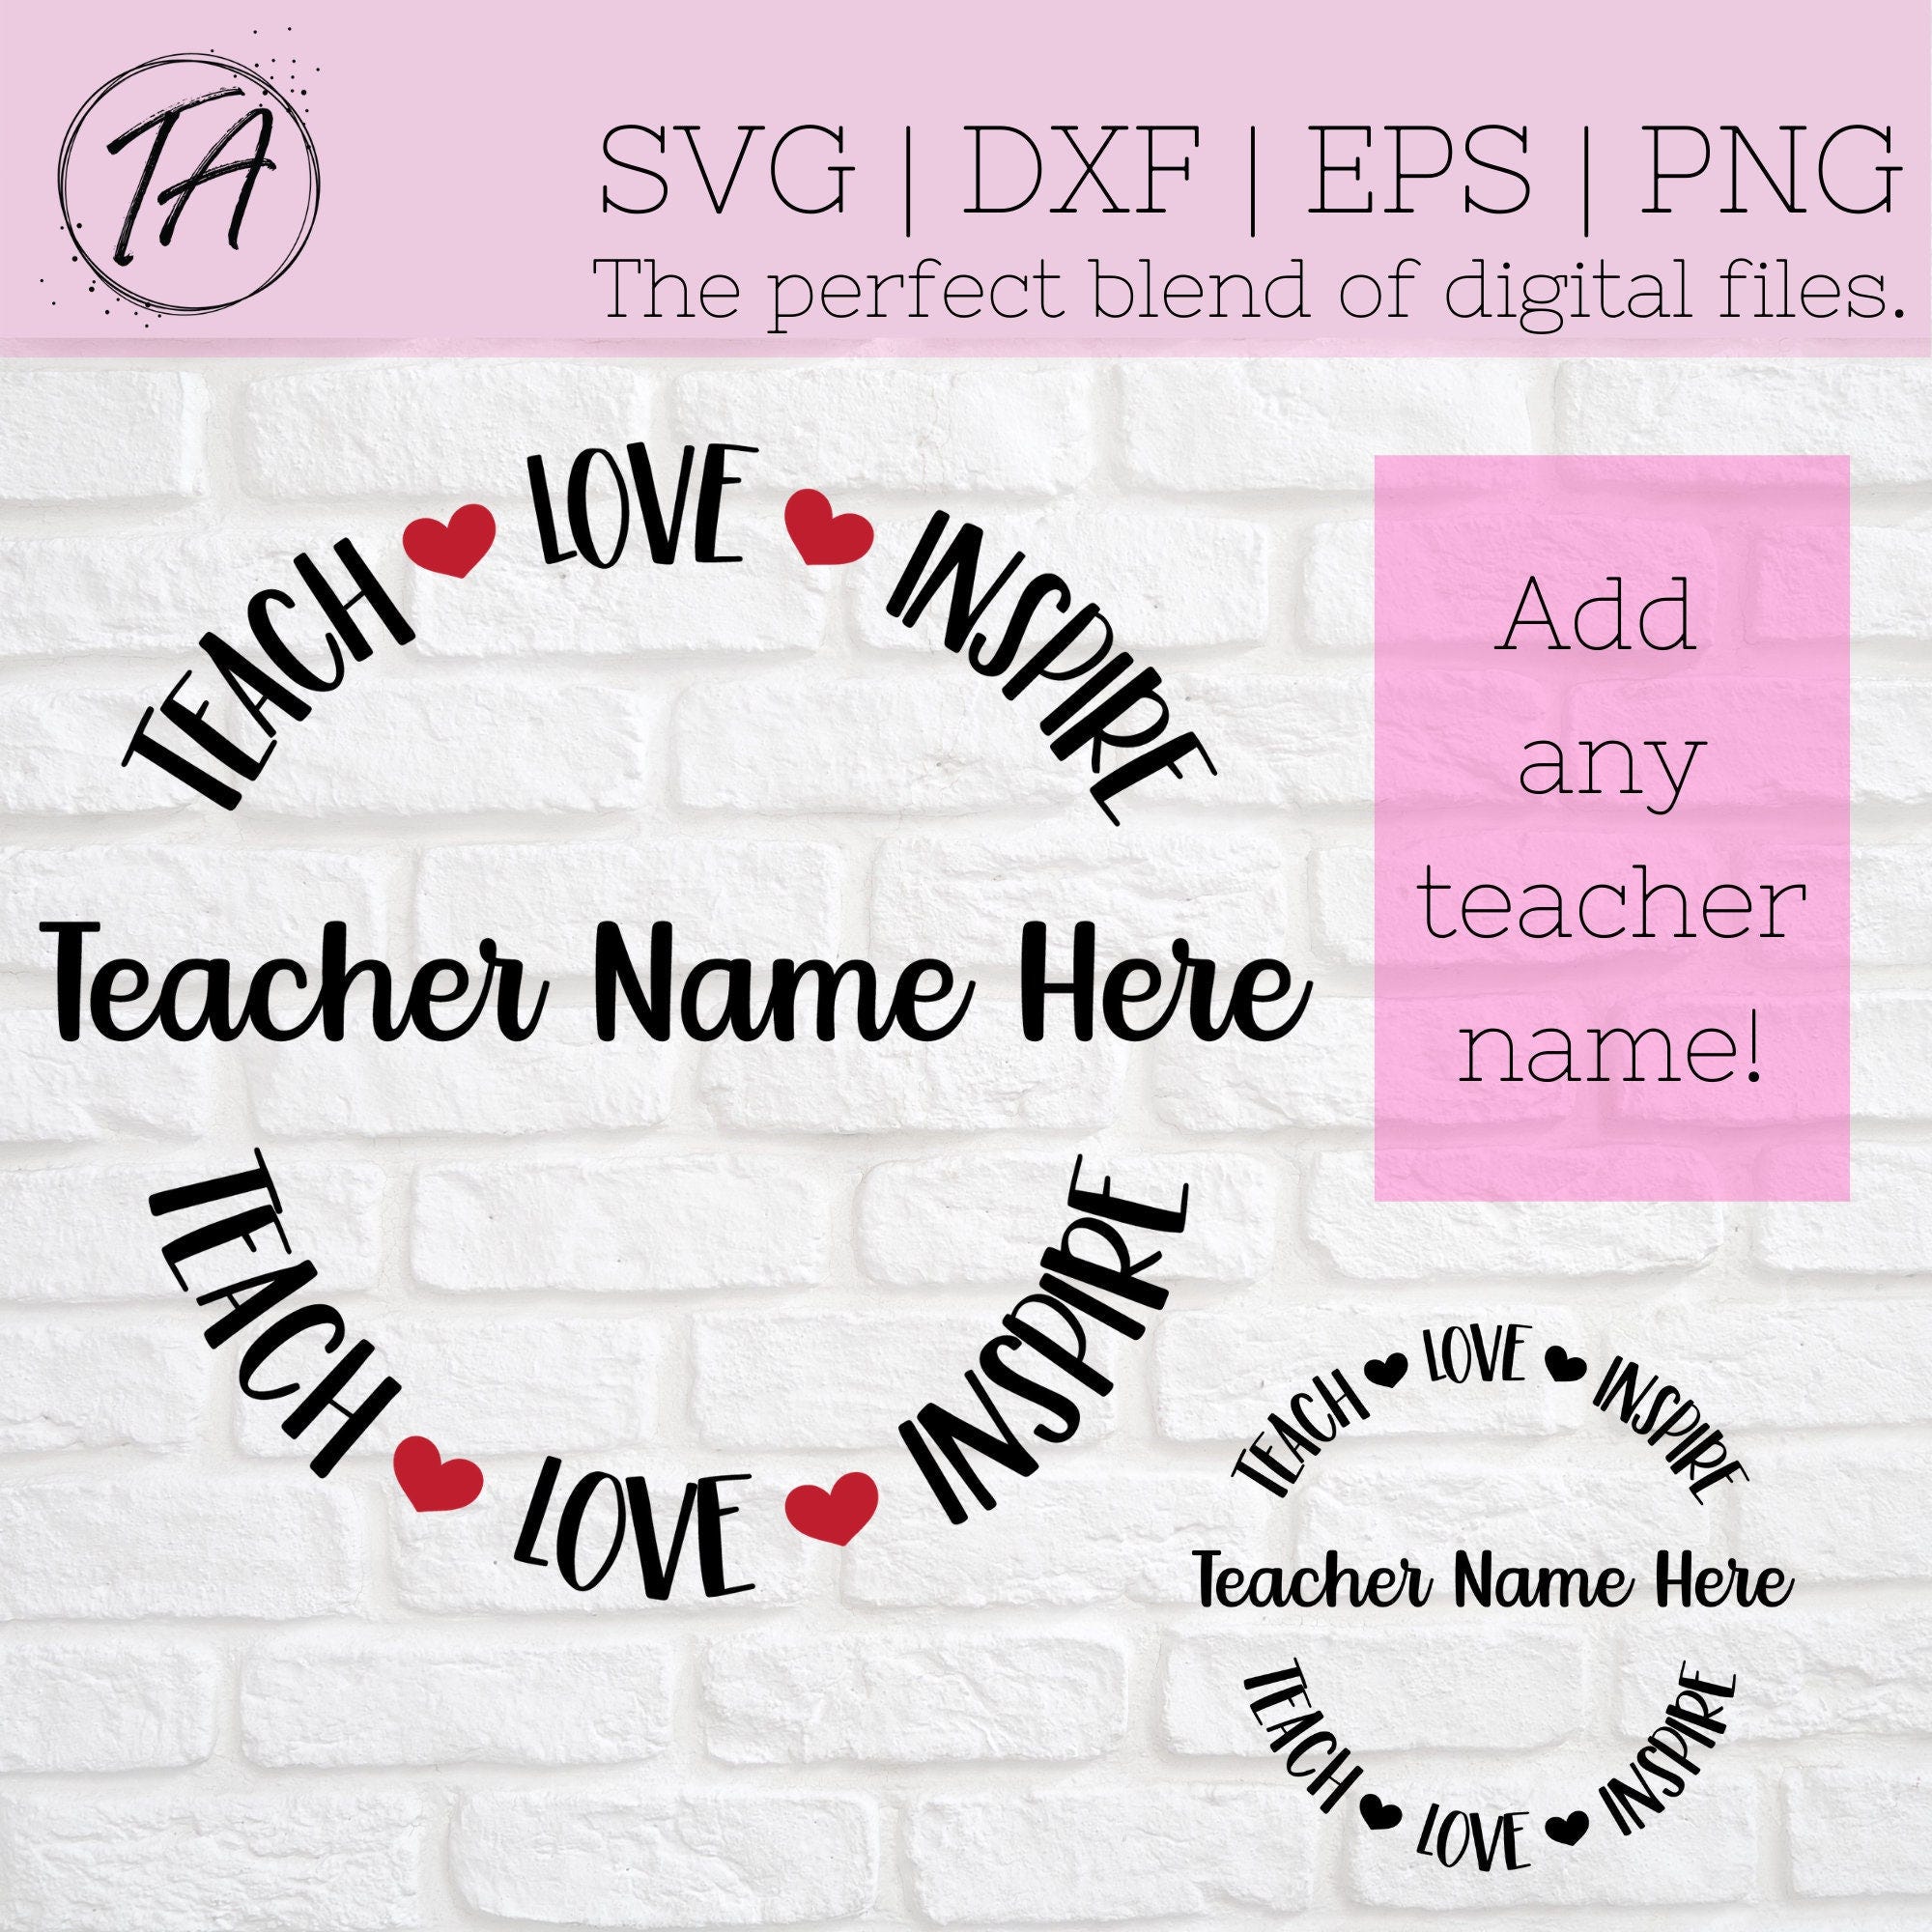 Teach Love Inspire svg - Christmas Teacher svg - Teacher Gift svg - Teacher Christmas Gift svg - Personalized svg - Teacher Ornament svg